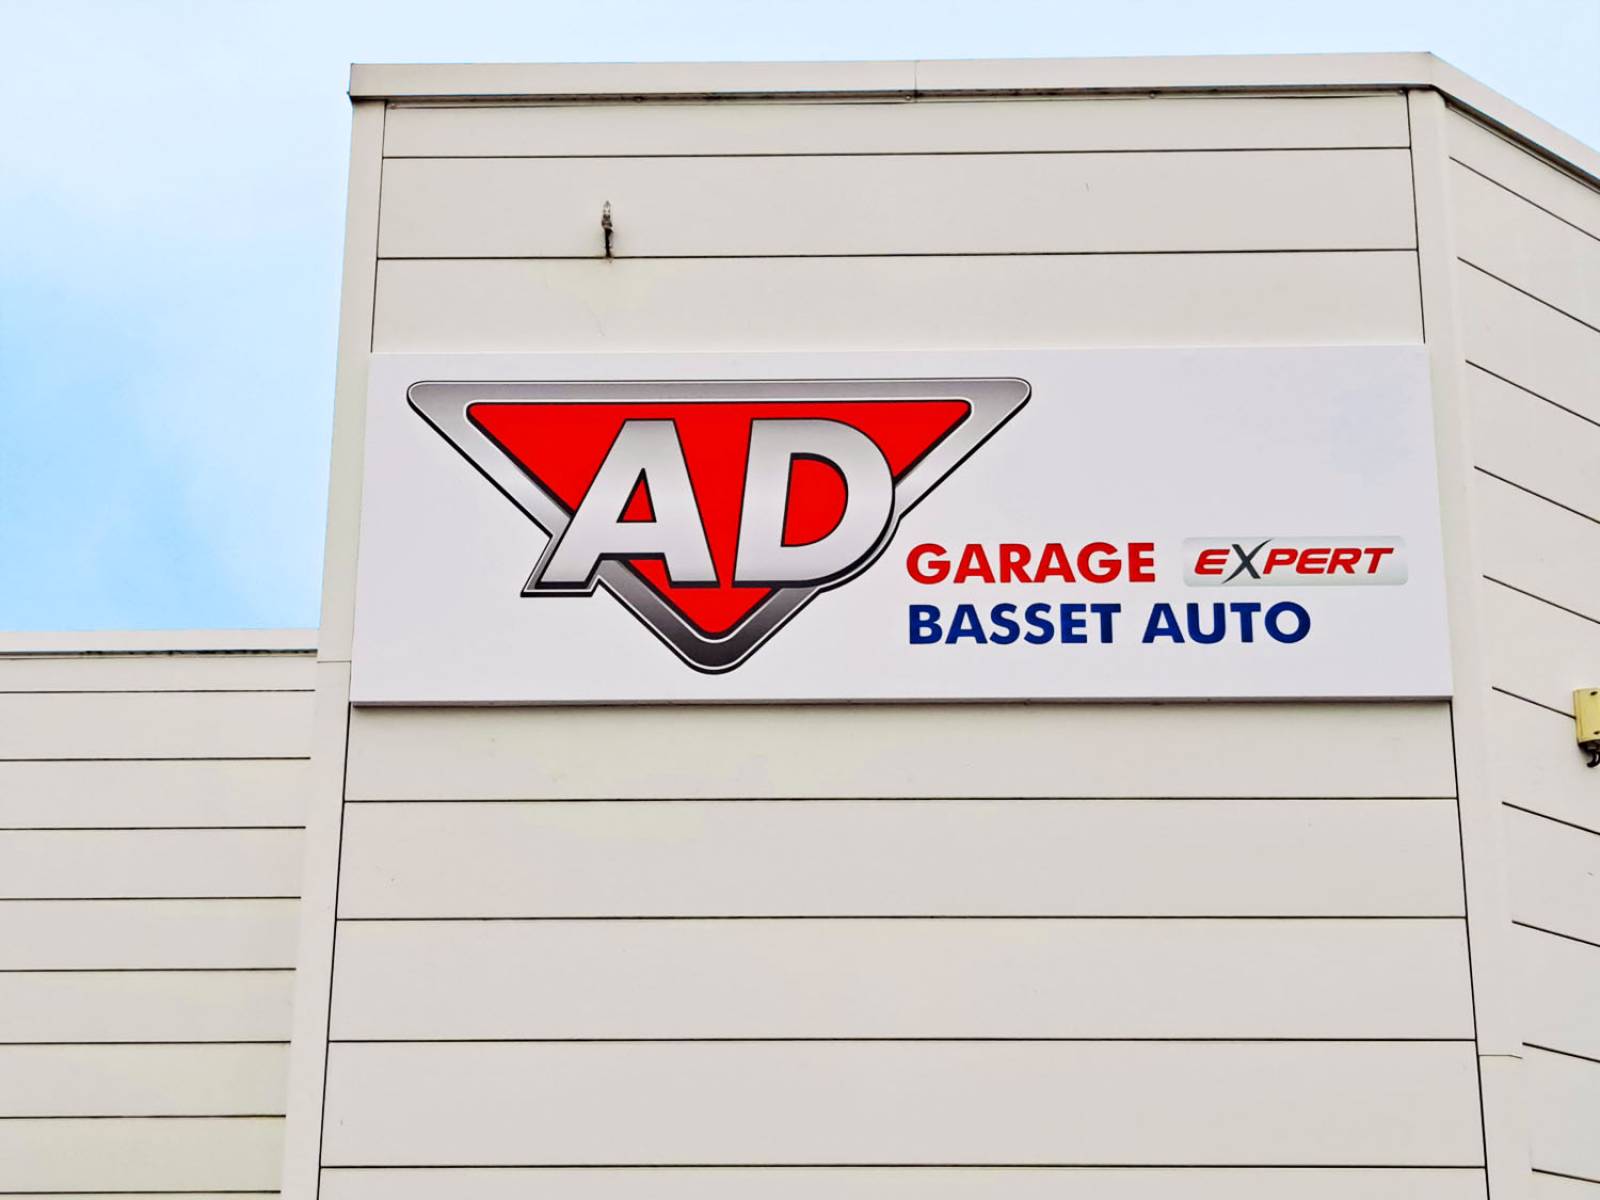 AD Carrosserie Garage Automobiles Panneau rigide solide en relief aluminium extérieur façade Beaujolais 69